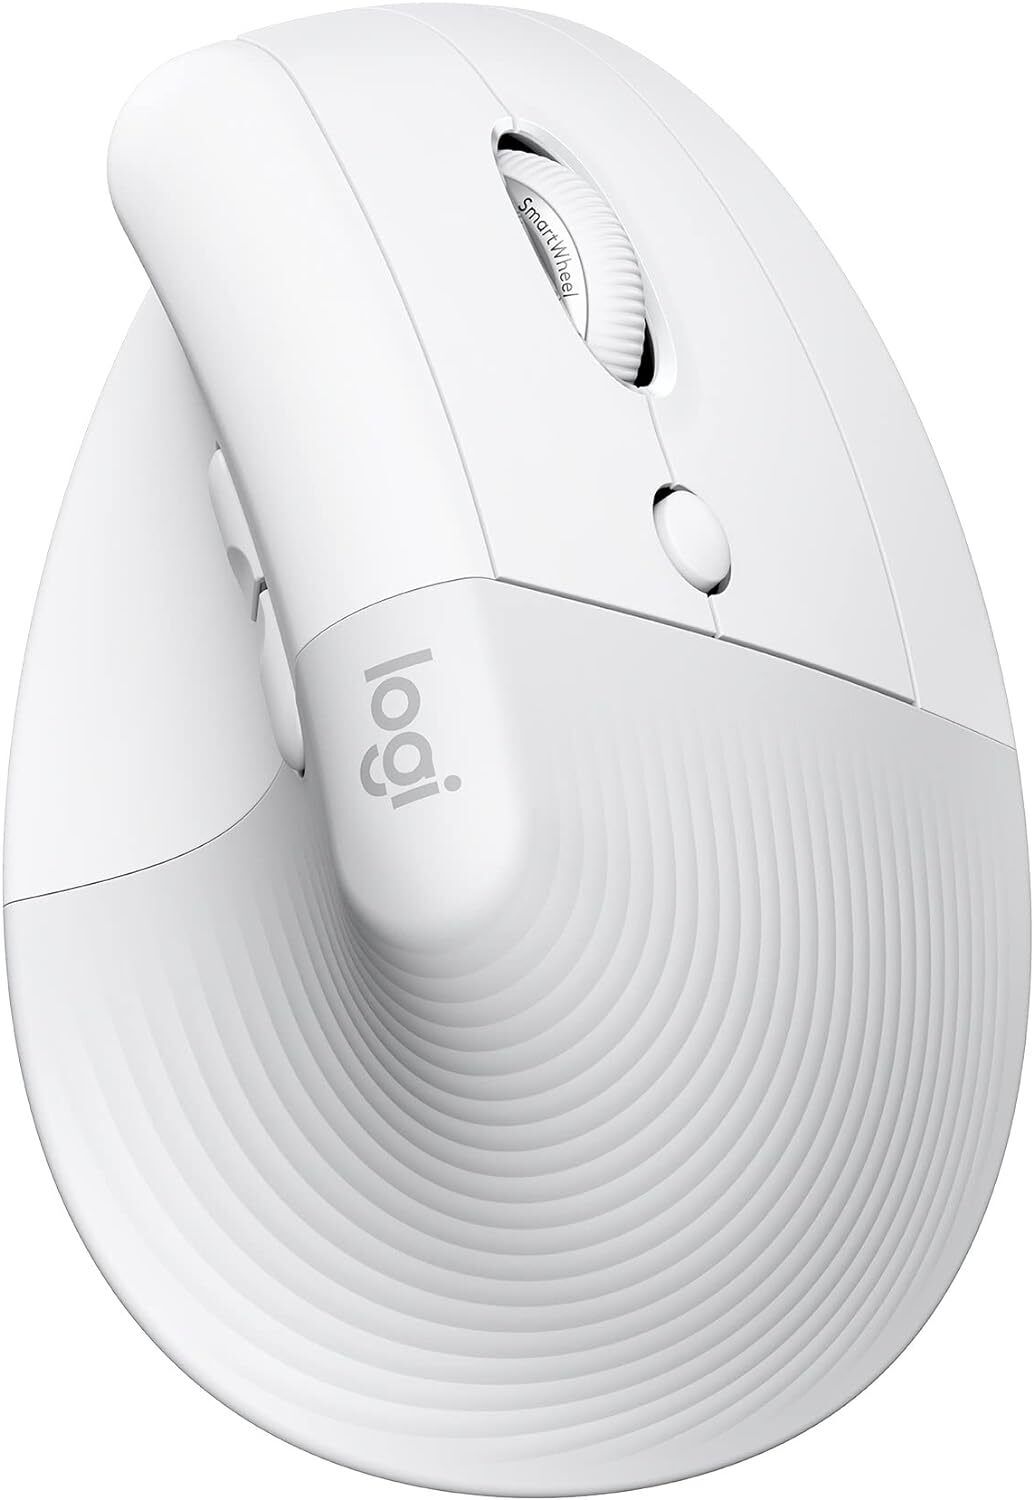 Logitech Lift Vertical Ergonomic Mouse Wireless Bluetooth - Off White